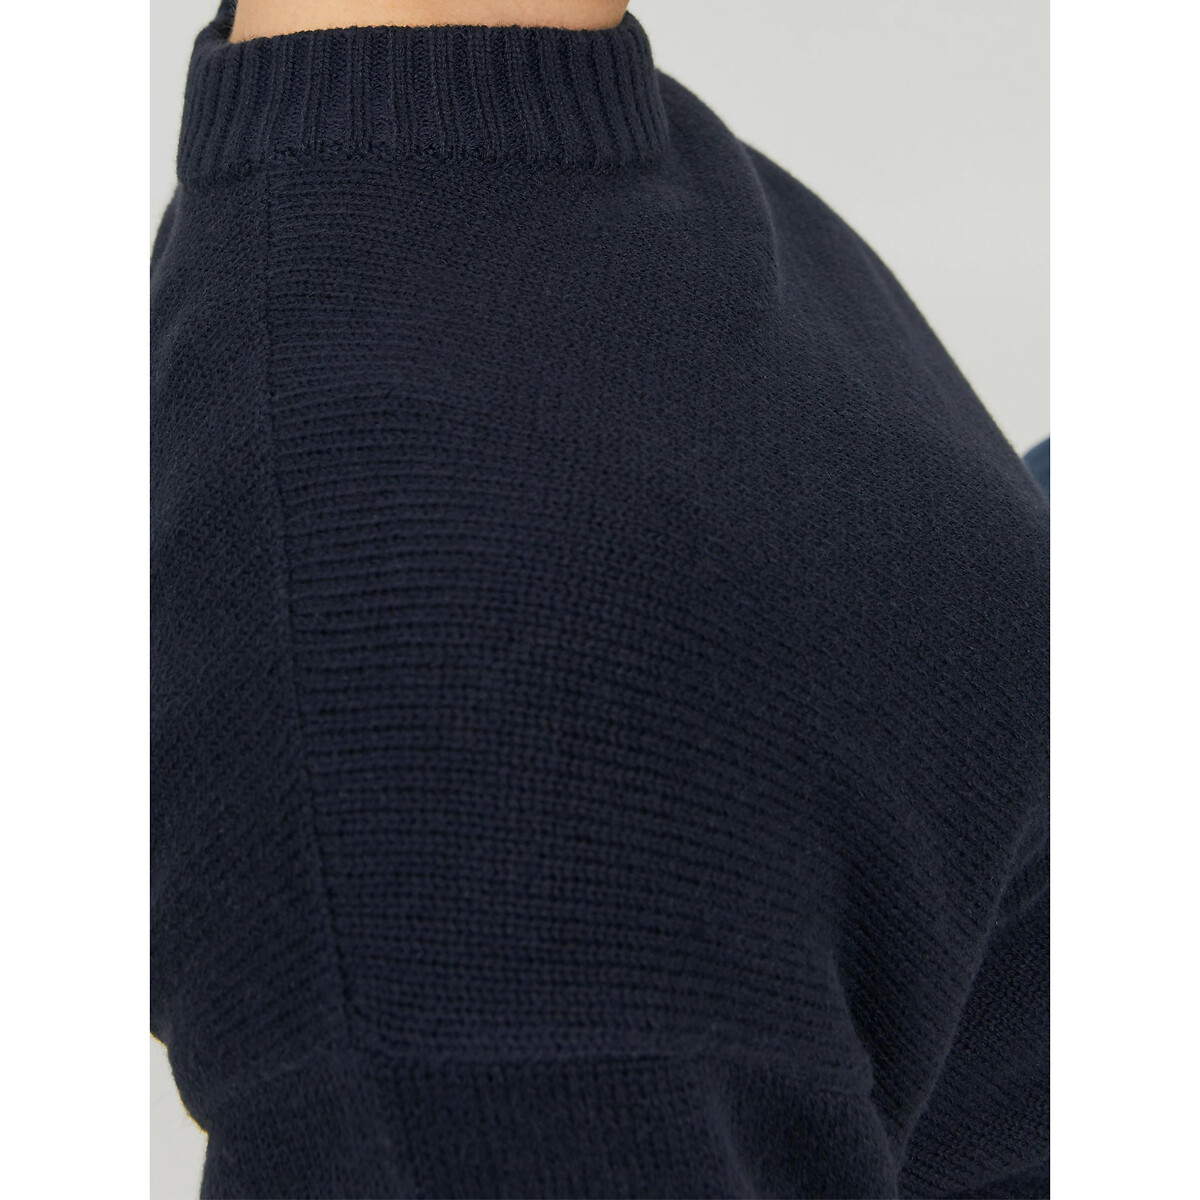 Пуловер С круглым вырезом Jjejack XL синий LaRedoute, размер XL - фото 2